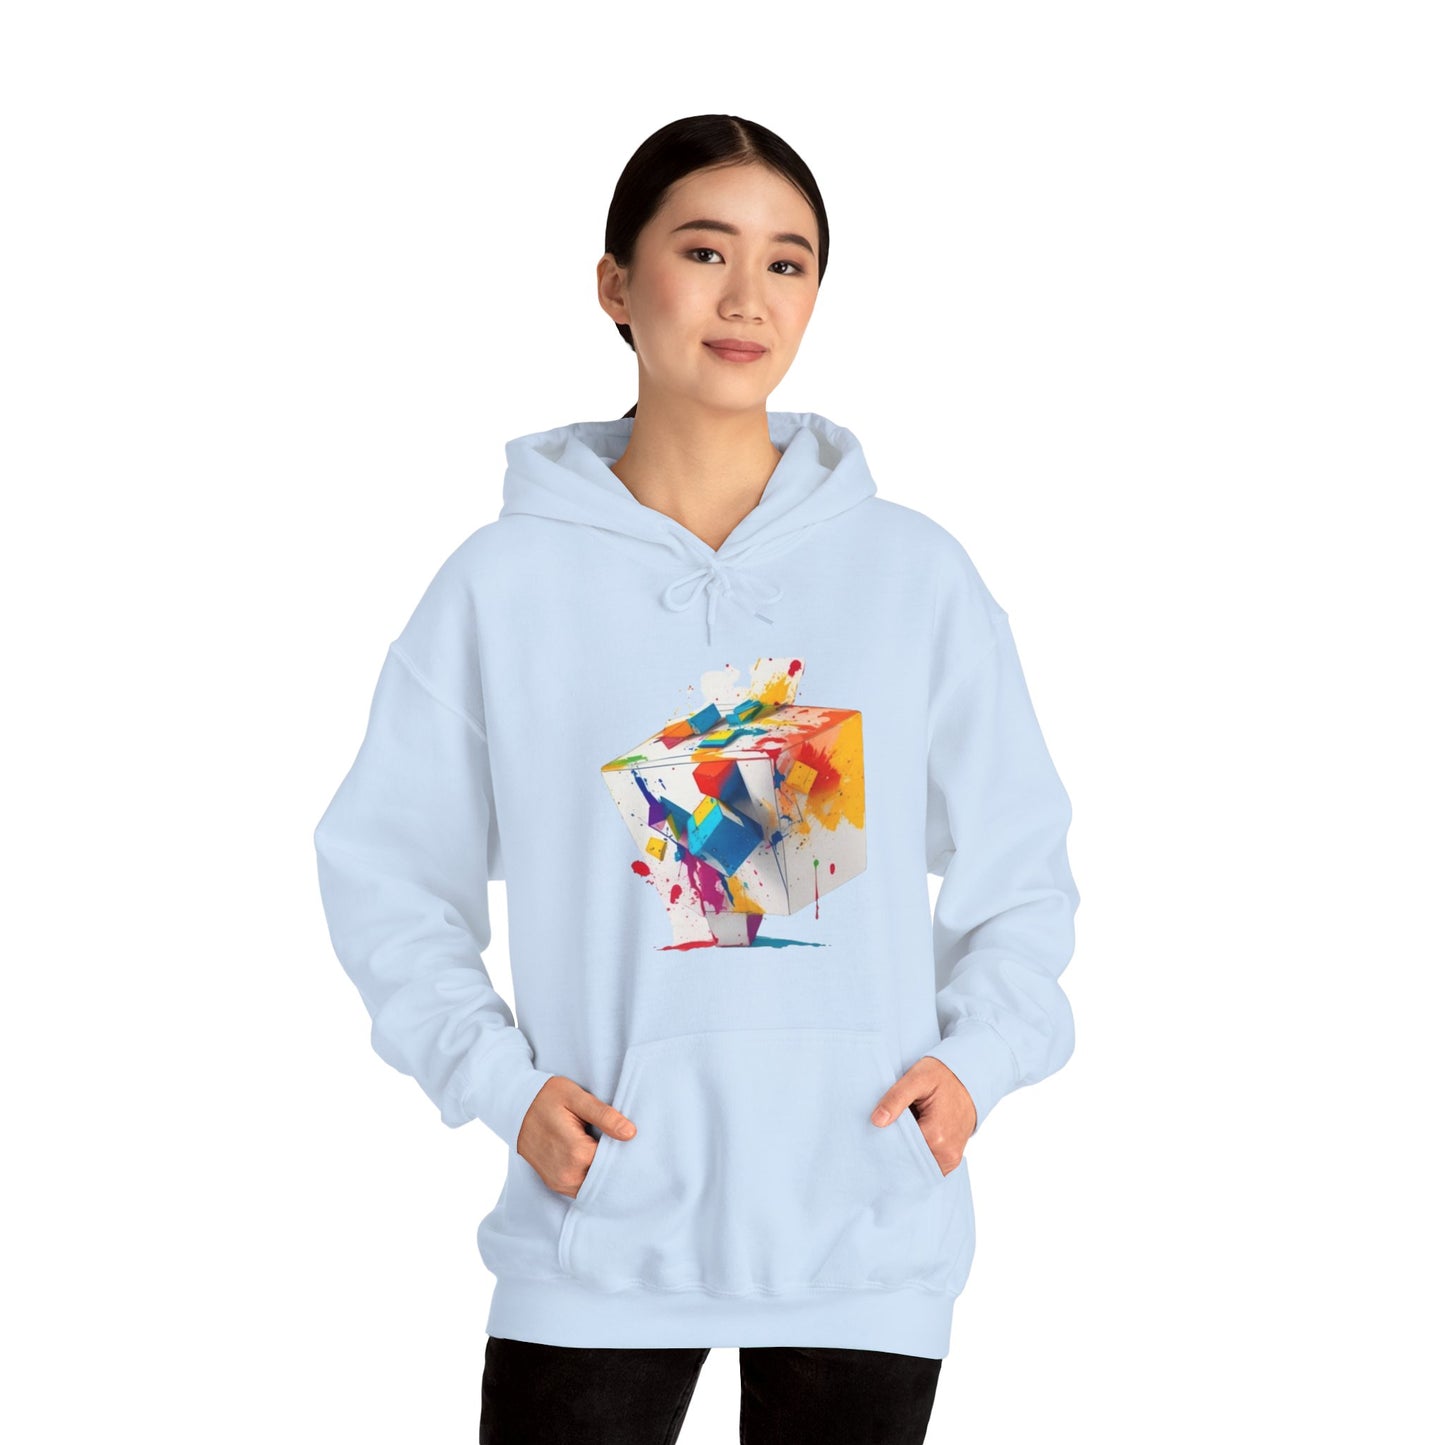 Colourful 3D Cube - Unisex Hooded Sweatshirt